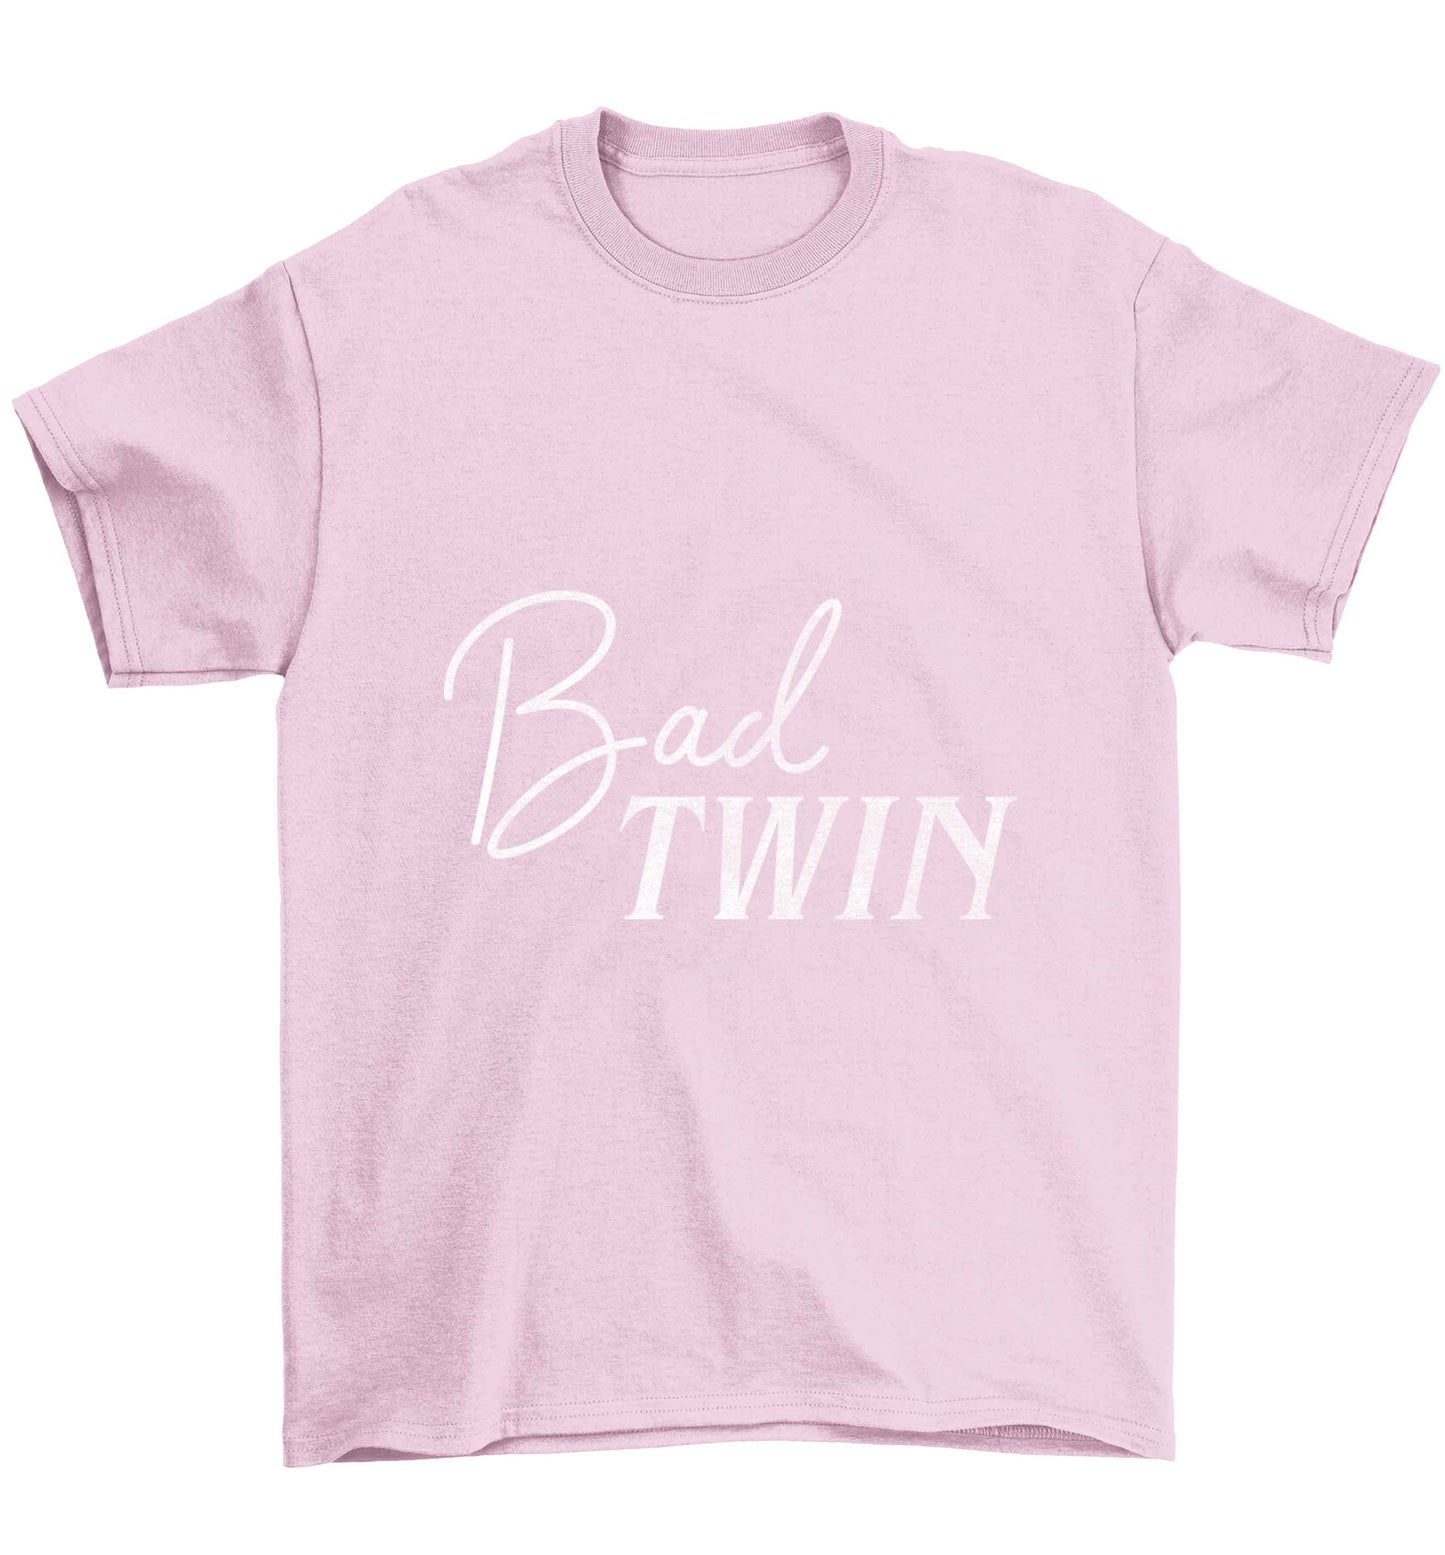 Bad twin Children's light pink Tshirt 12-13 Years